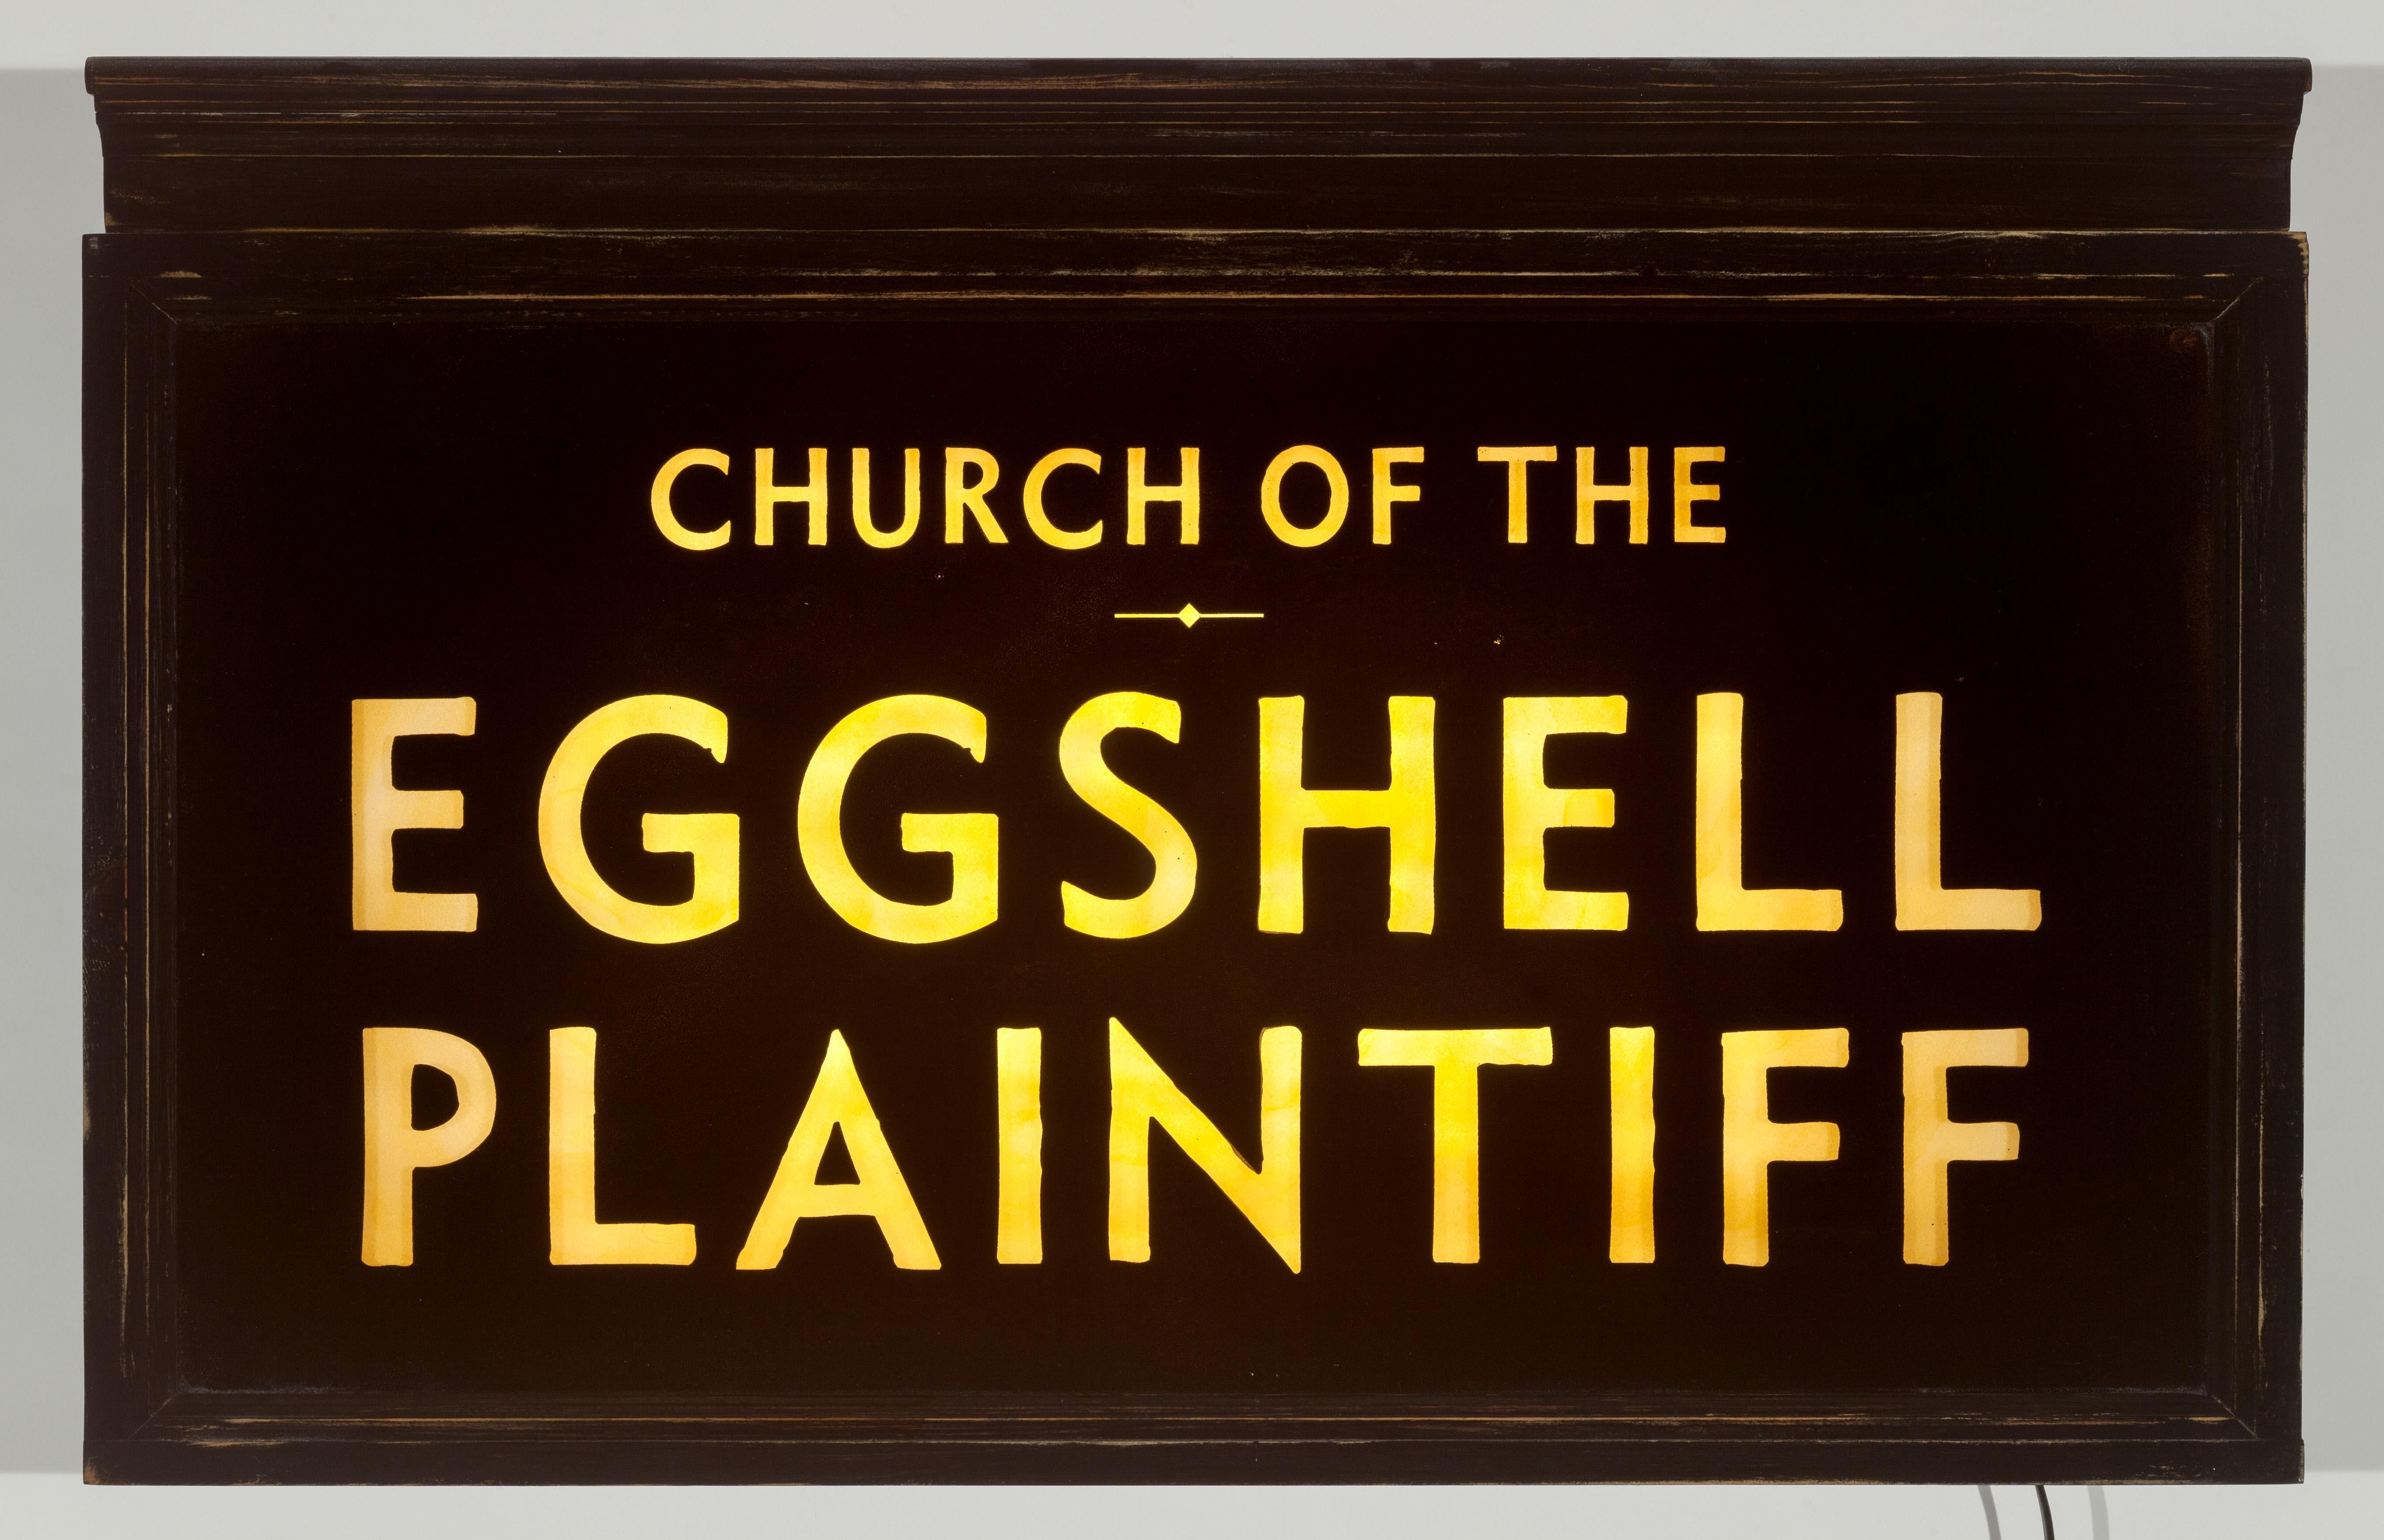 Church of the Eggshell Plaintiff